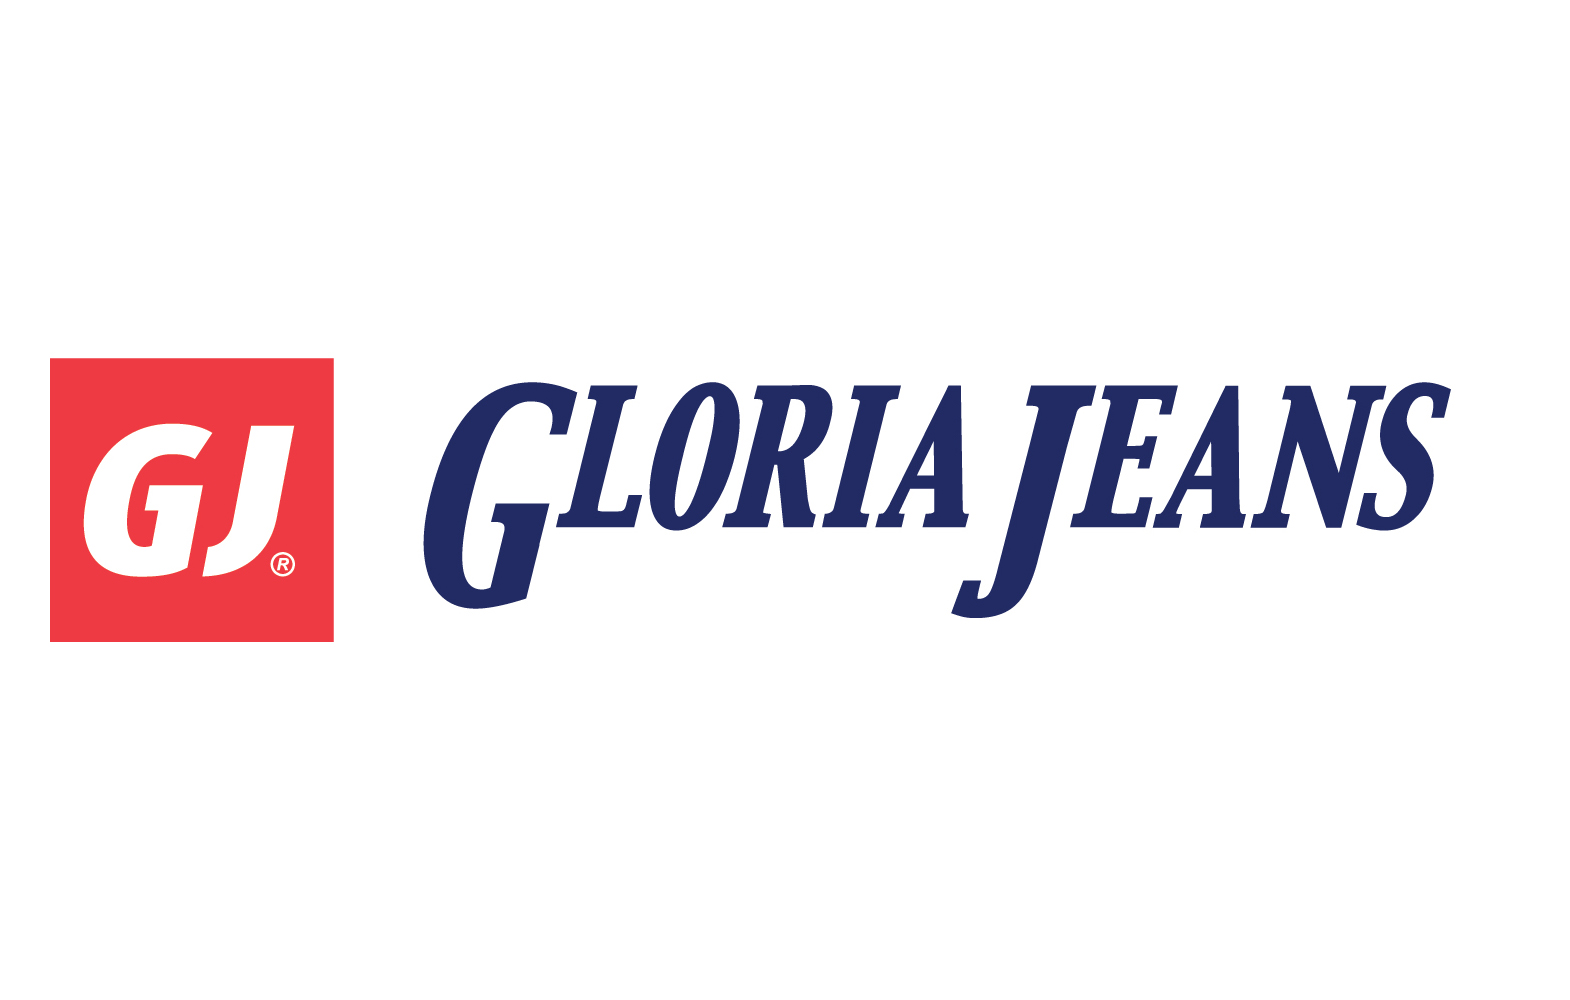  . - 50%! Gloria Jeans!  ! ,  , , , !   08/22